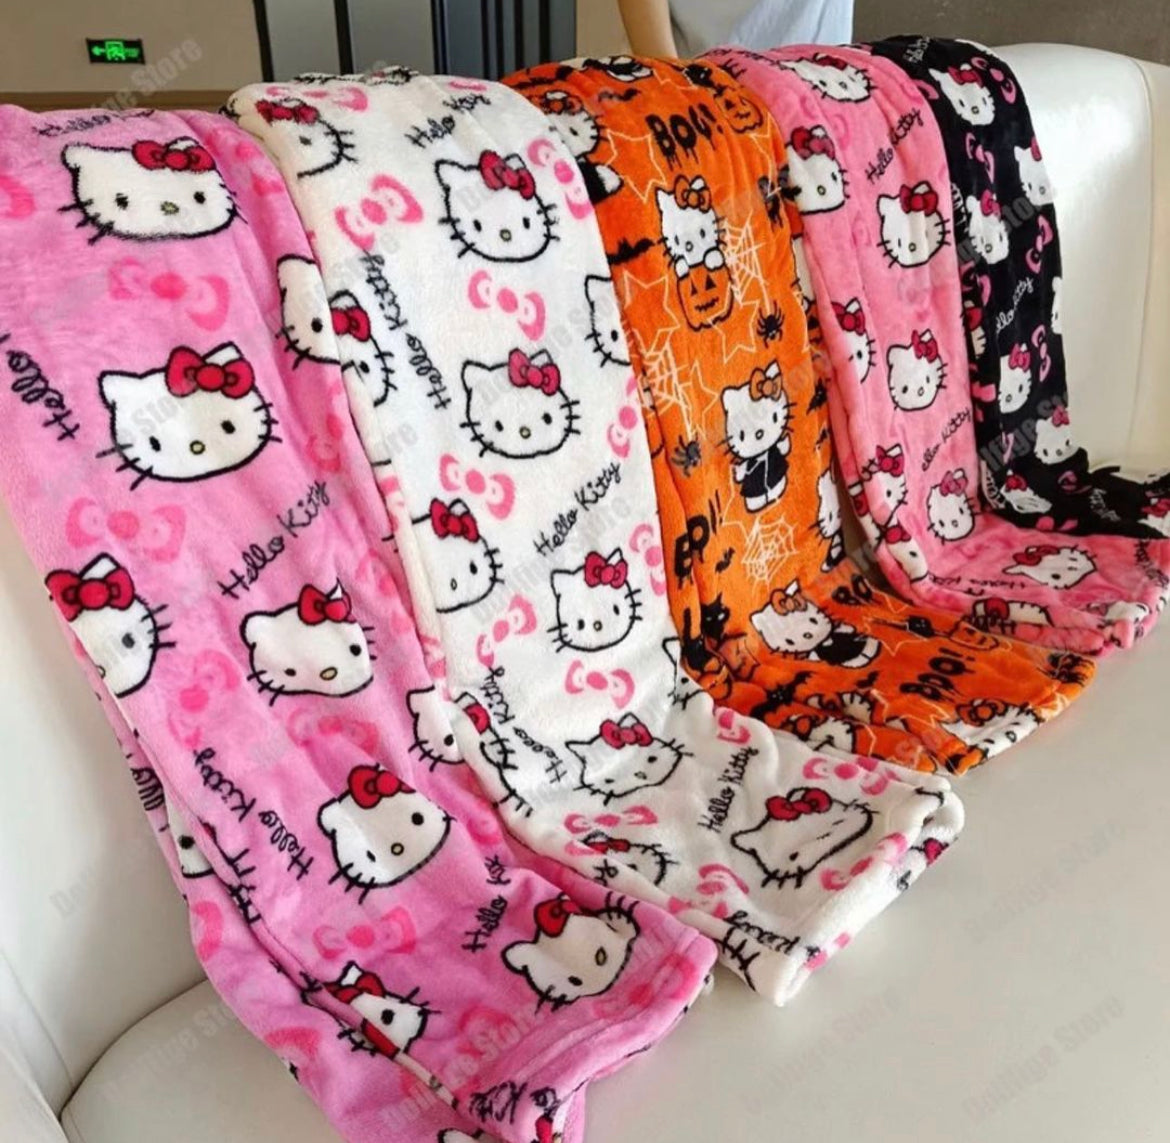 Hello Kitty Pajama Pants